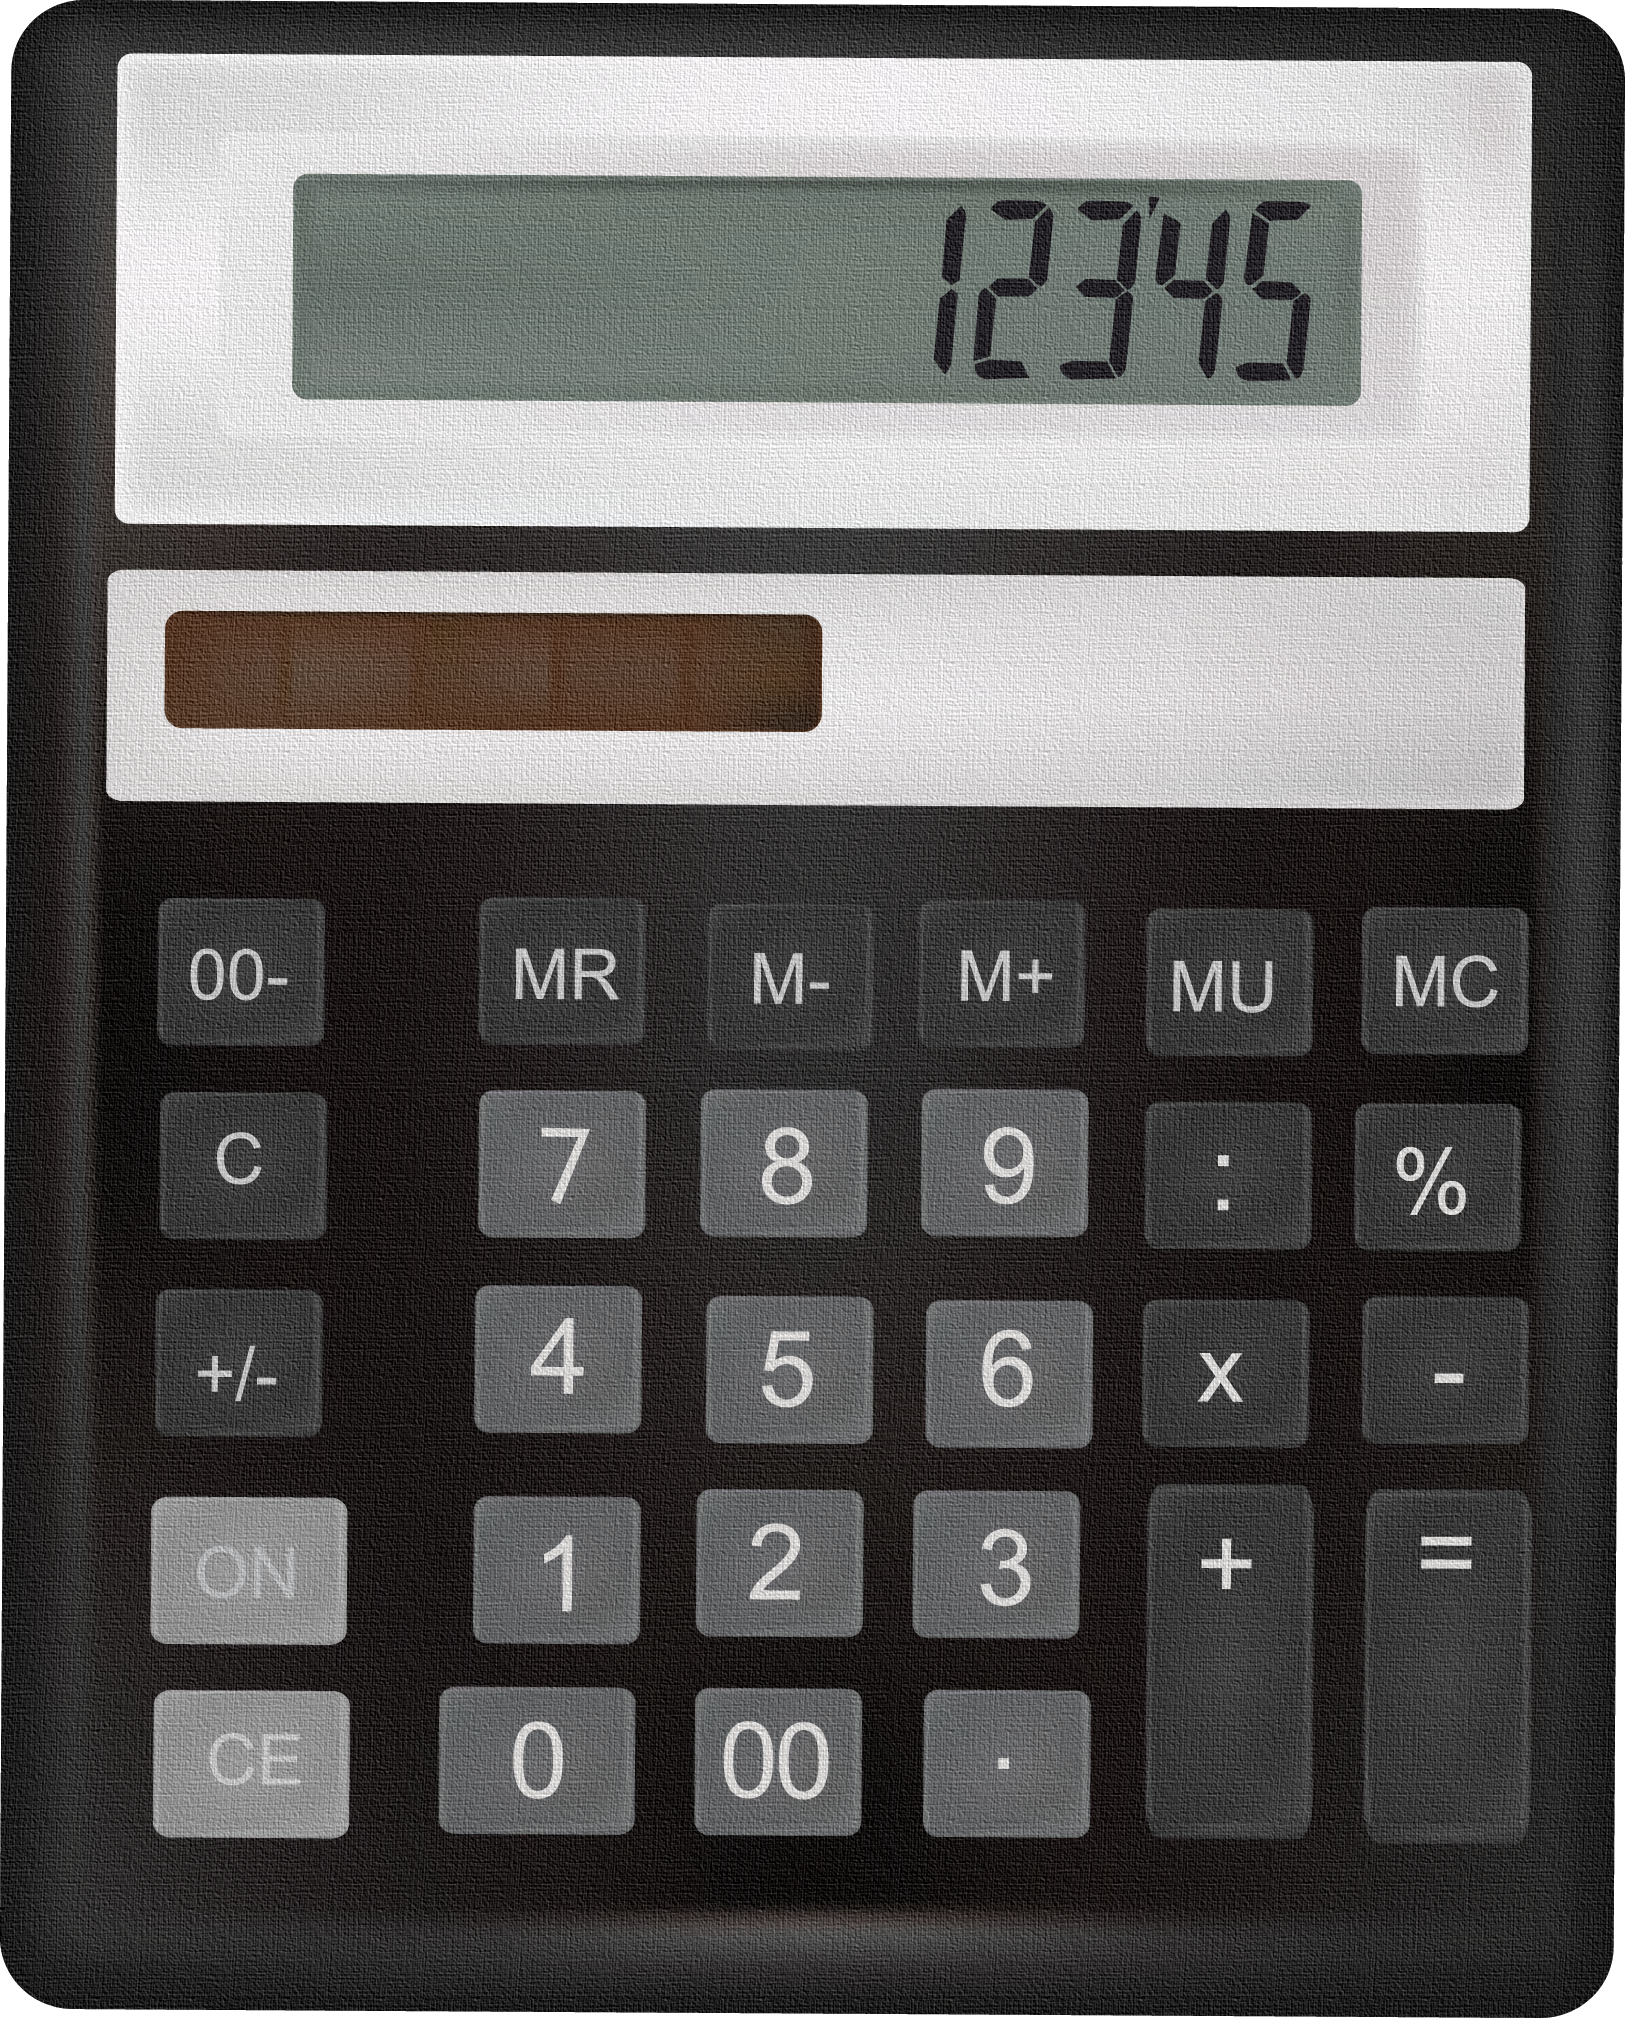 SZKOLNE BIUROWE itp - Kalkulator.png